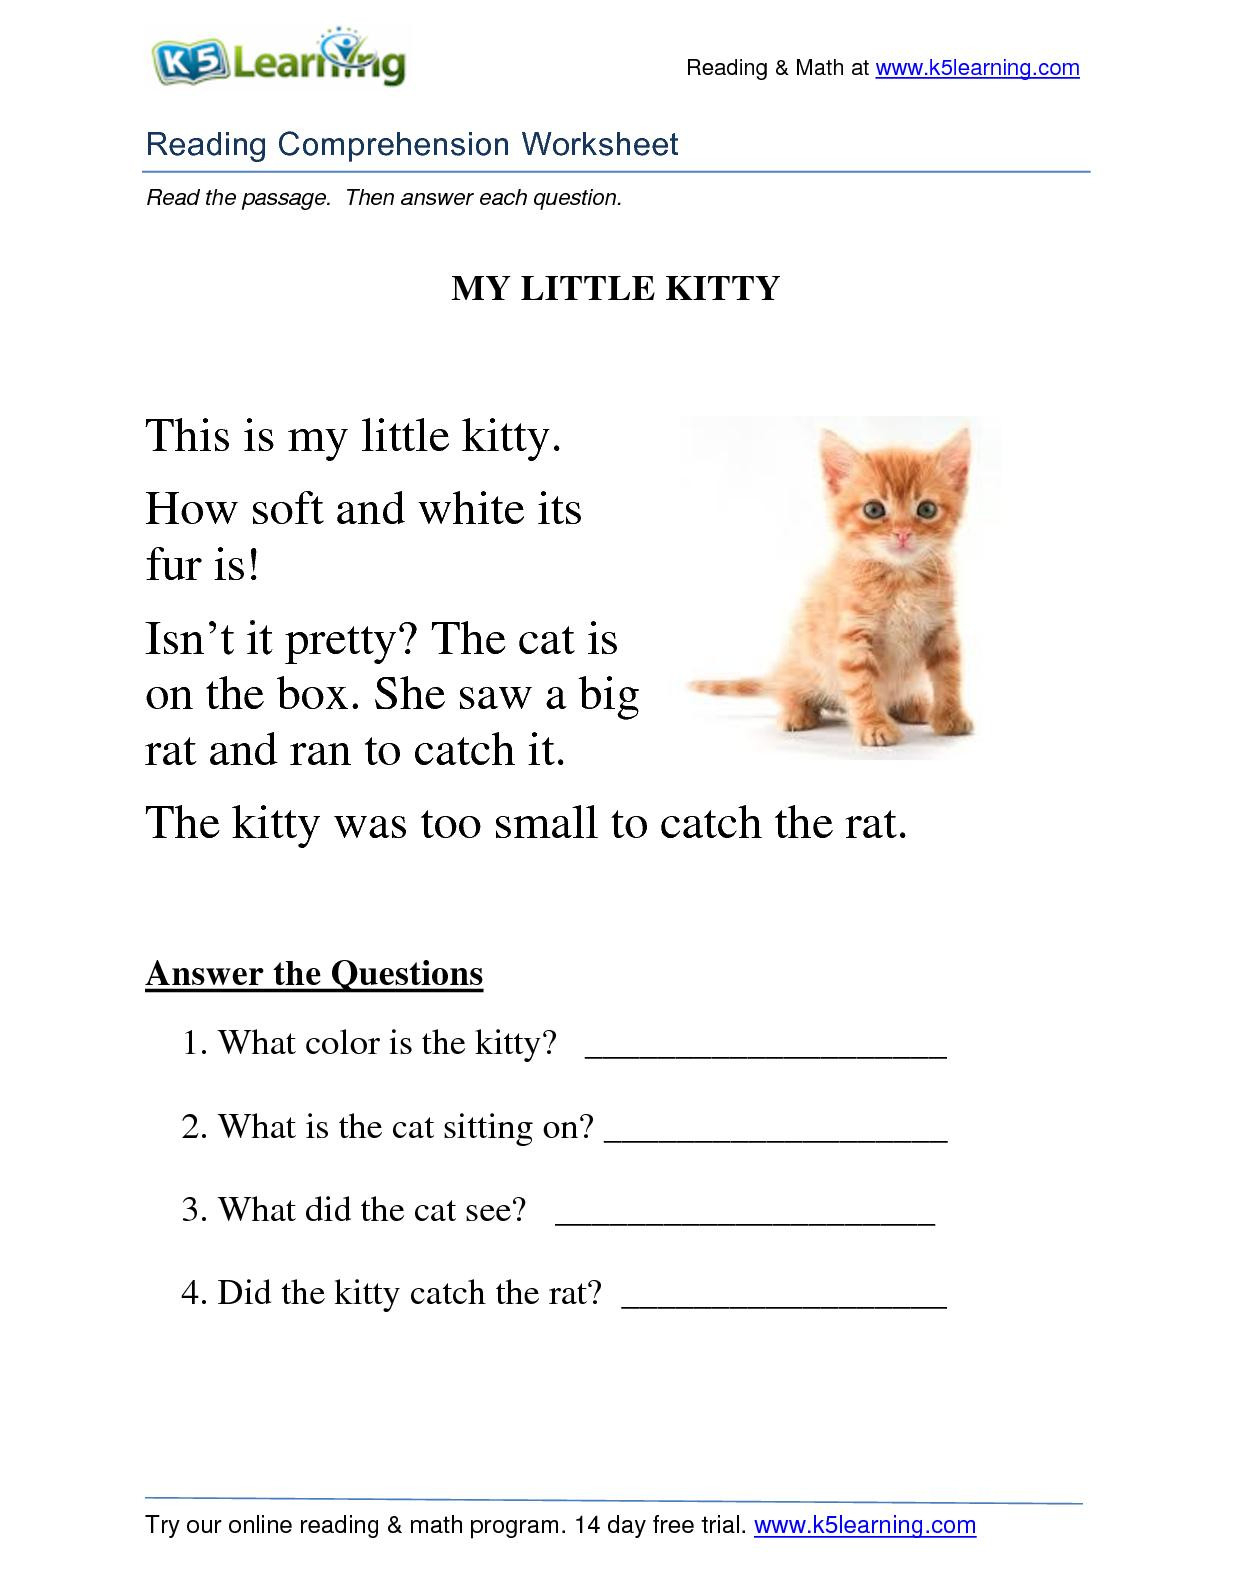 Calam o Reading Comprehension Worksheet Grade 1 Kitty Db excel